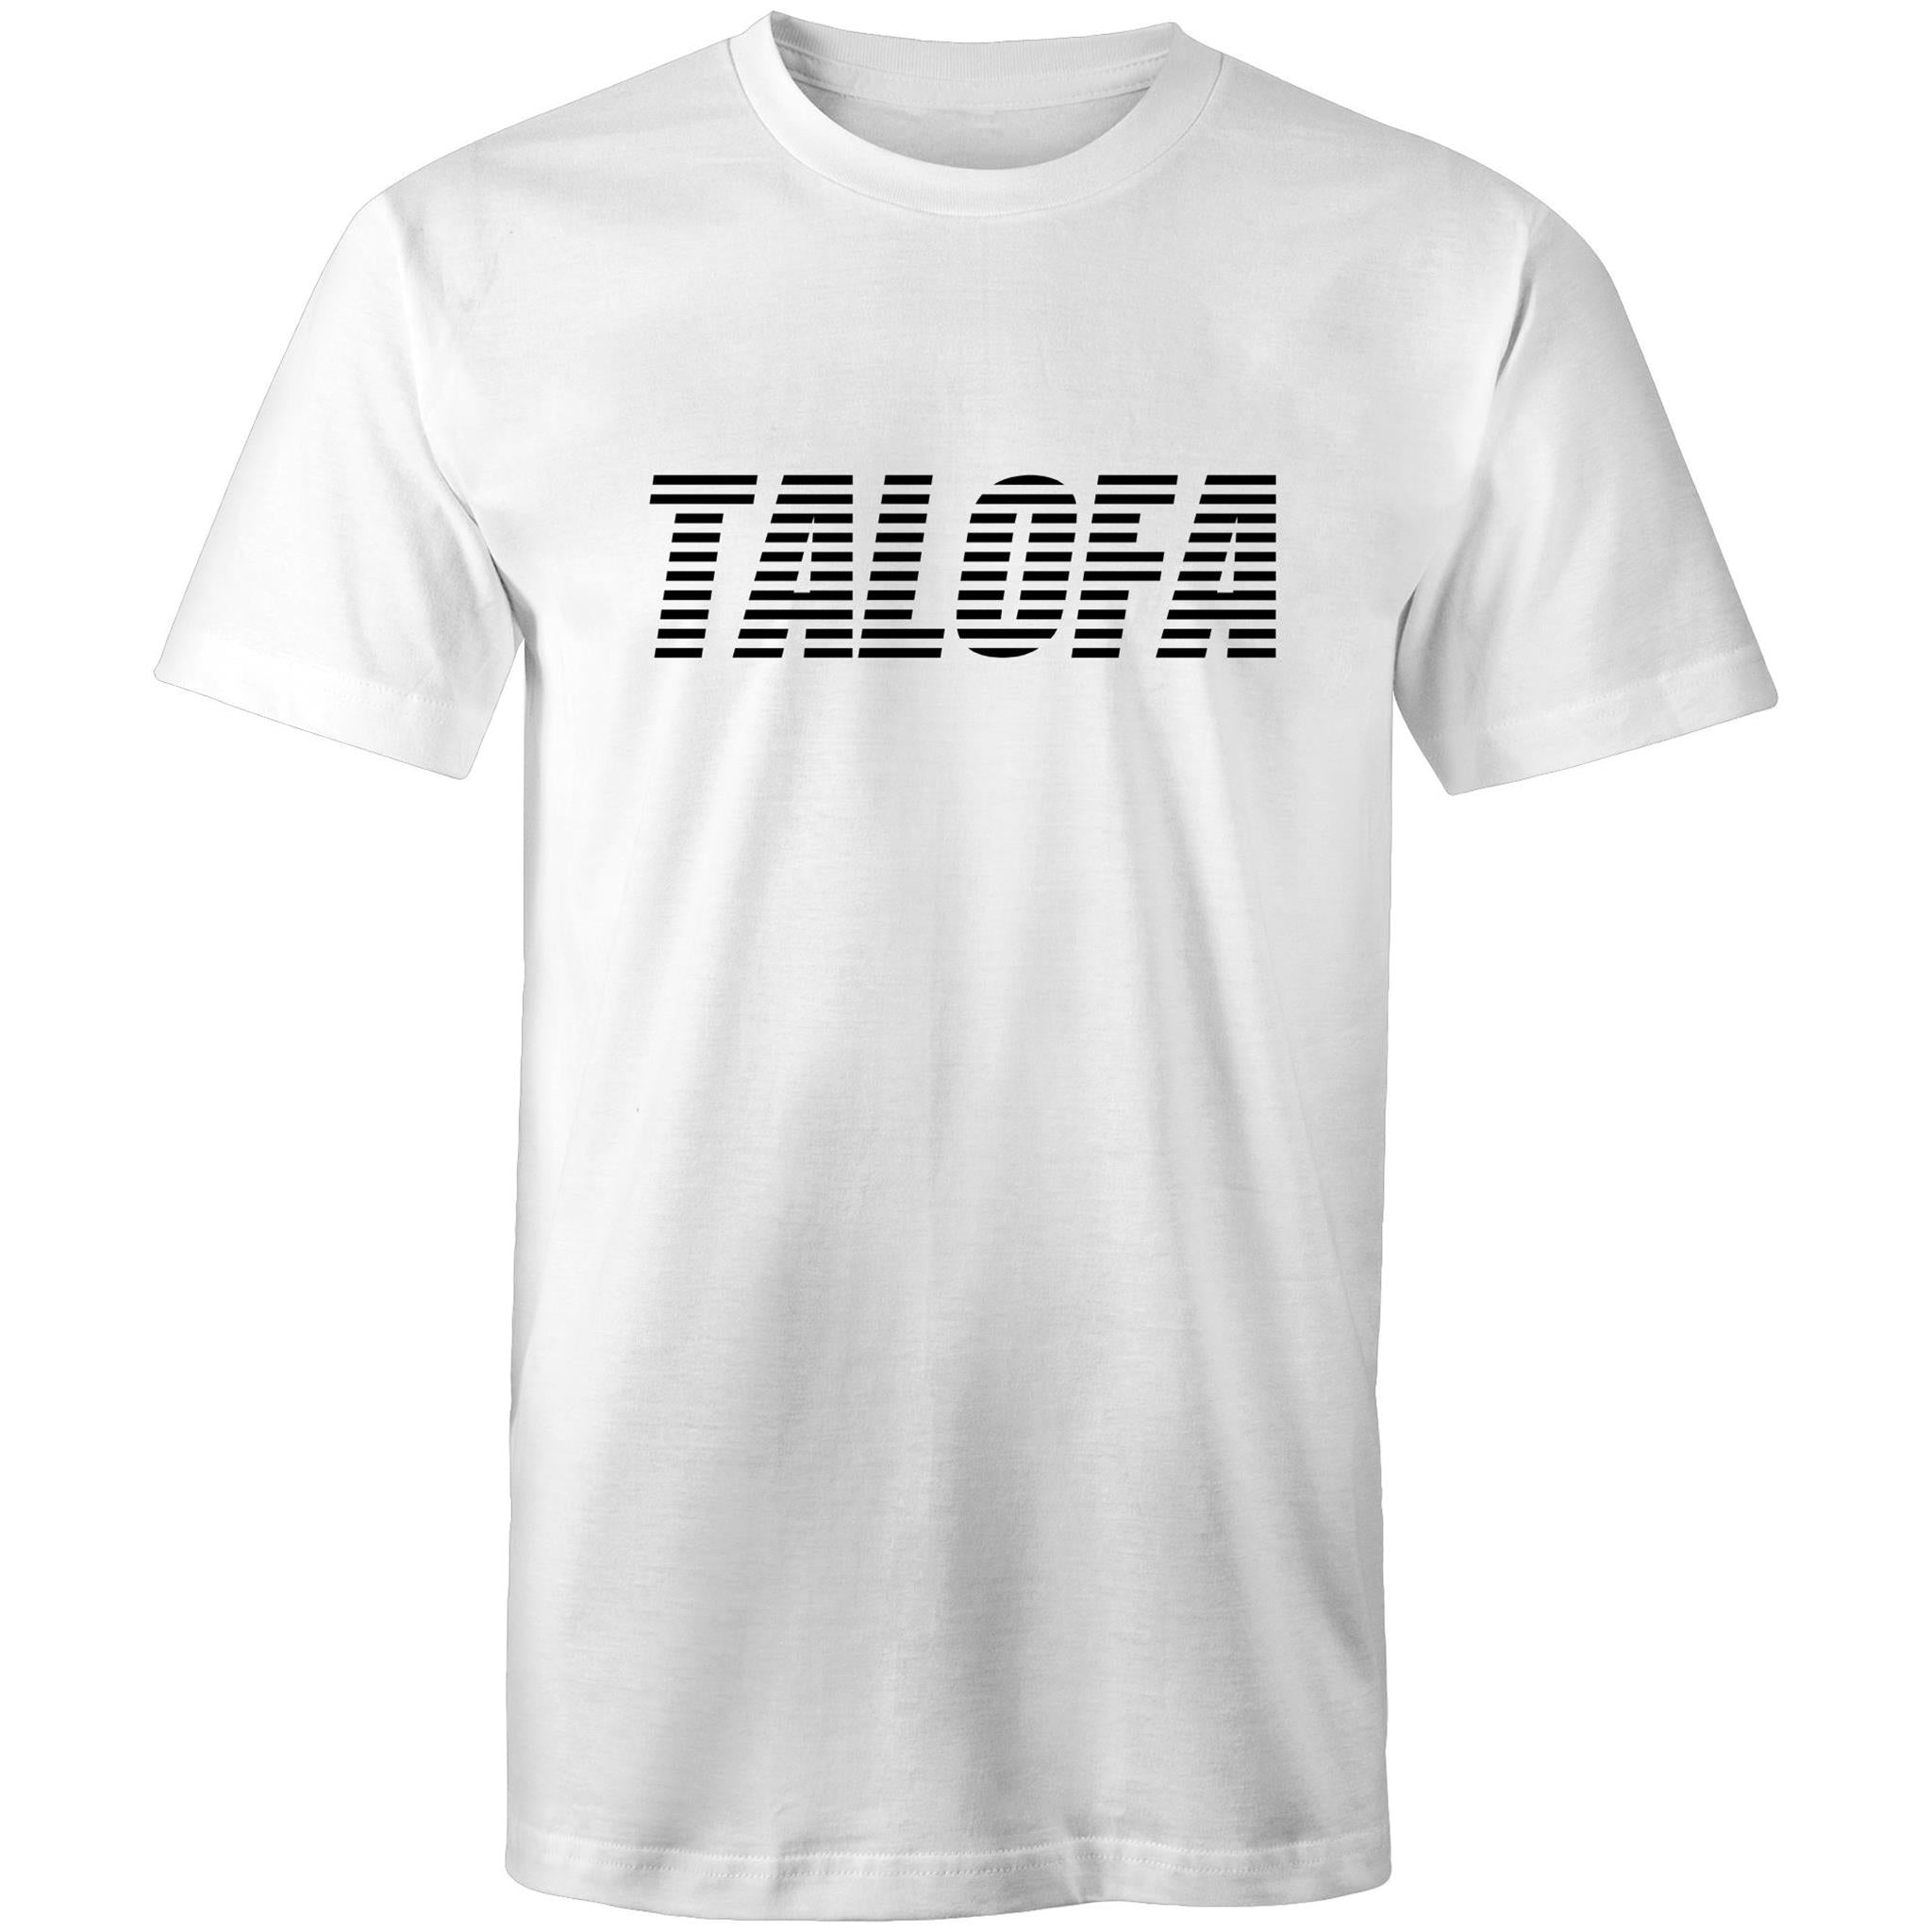 Talofa T-Shirt - Measina Treasures of Samoa